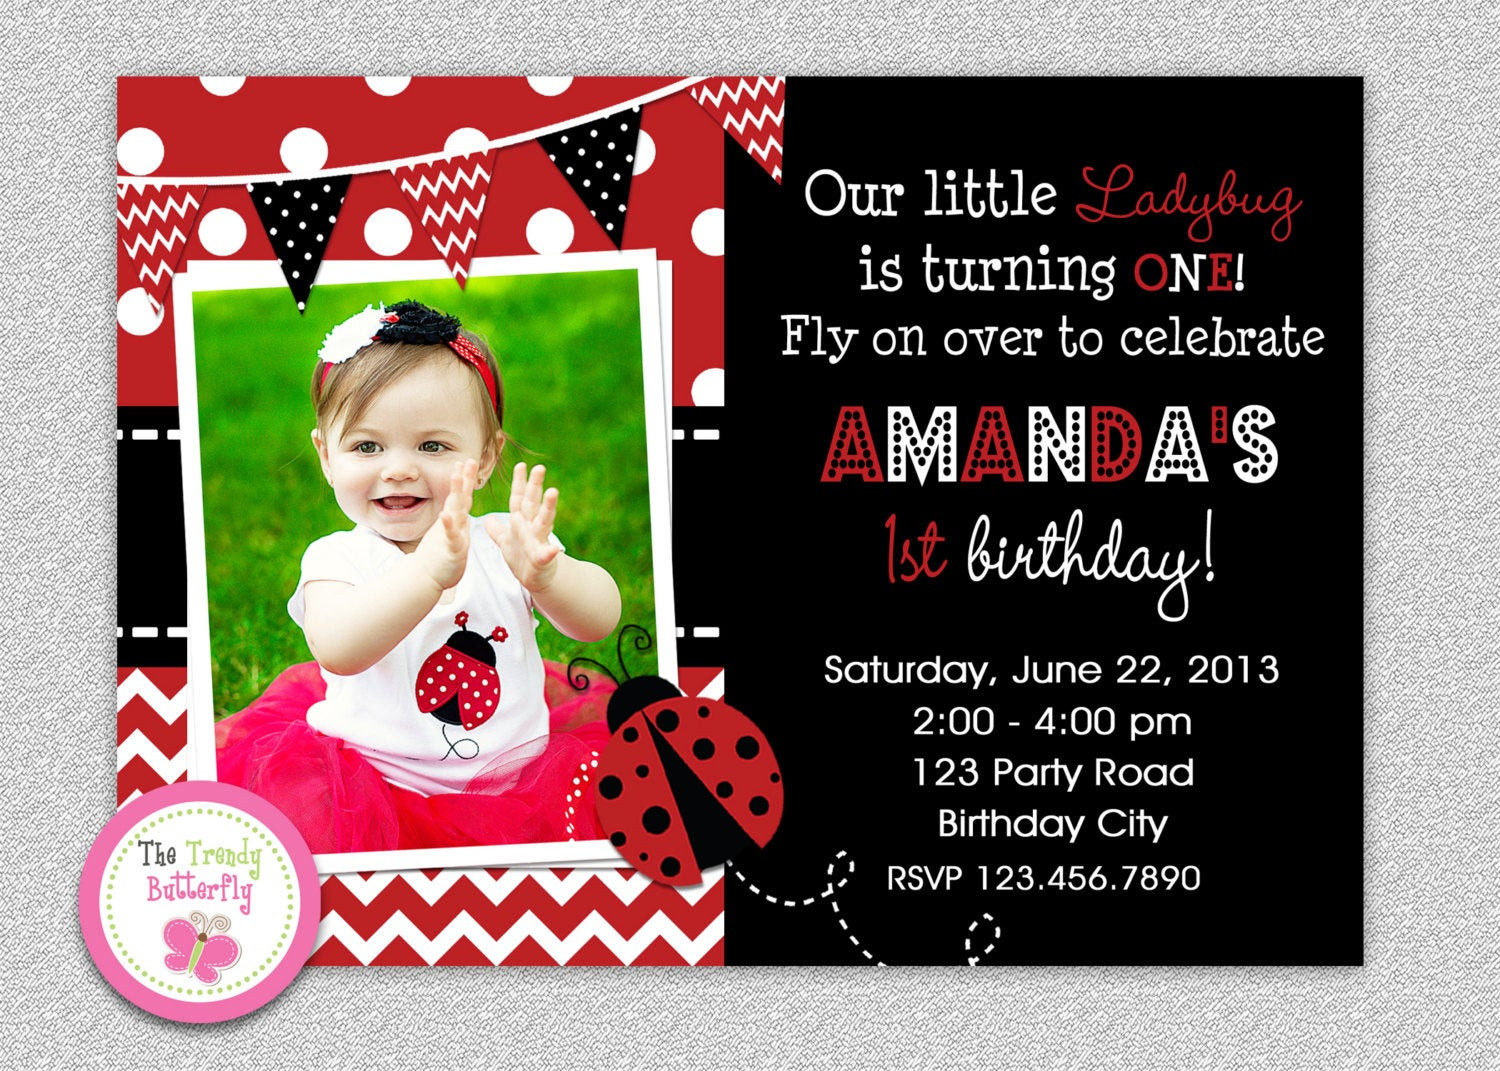 Ladybug 1st Birthday Invitations
 Ladybug Birthday Invitation 1st Birthday Party Invitation